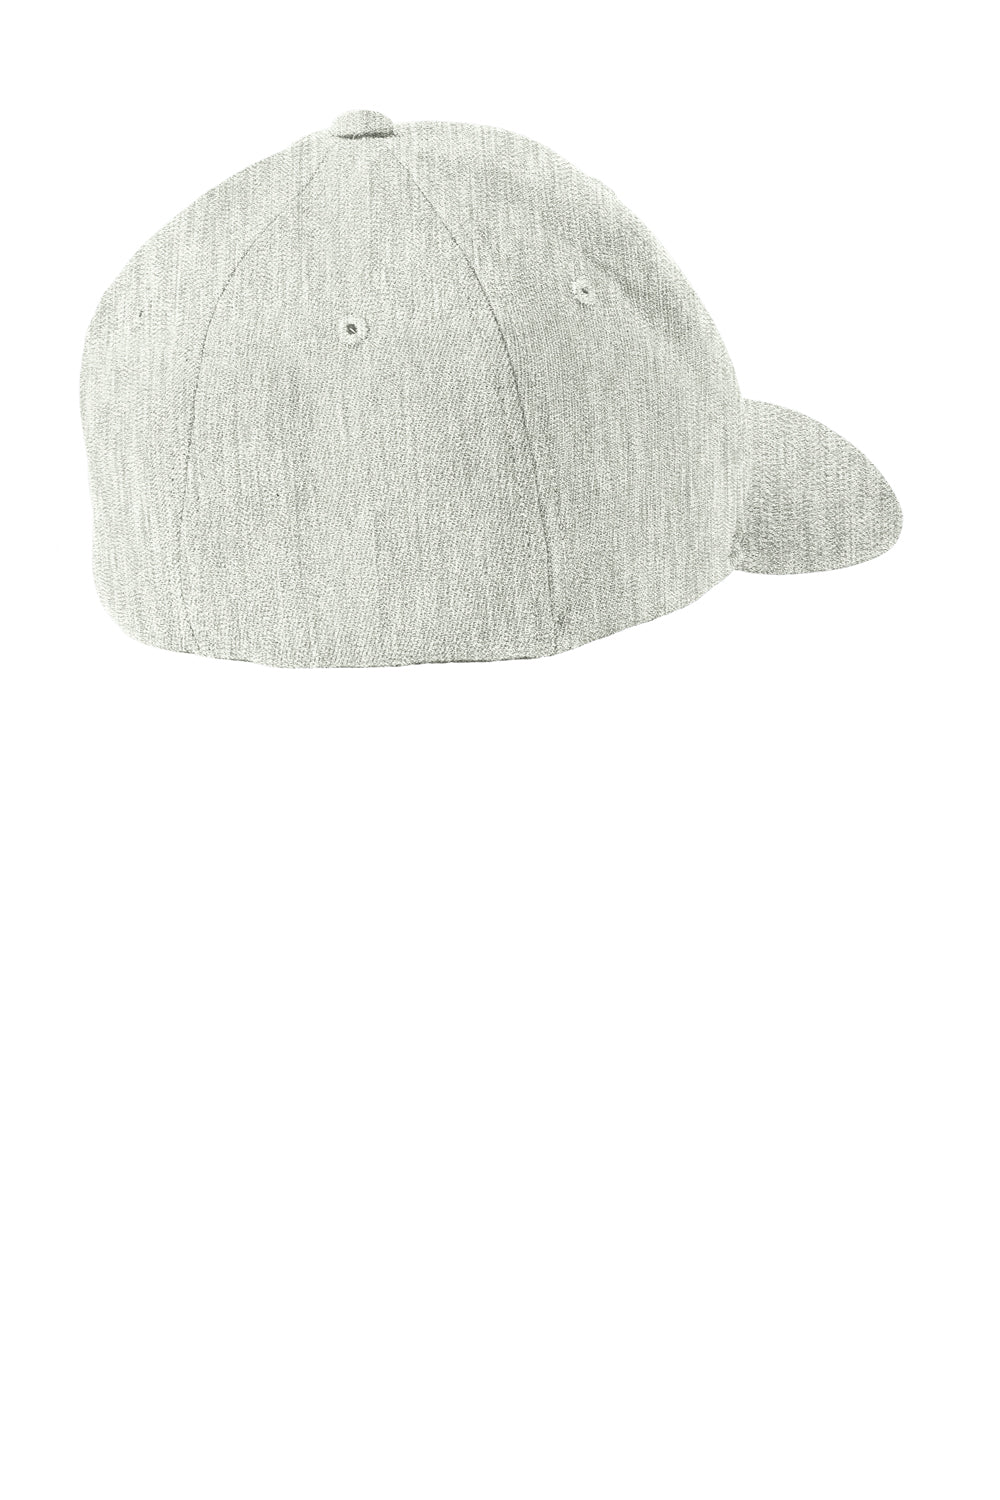 Port Authority C928 Flexfit Wool Blend Hat Heather Light Grey Back